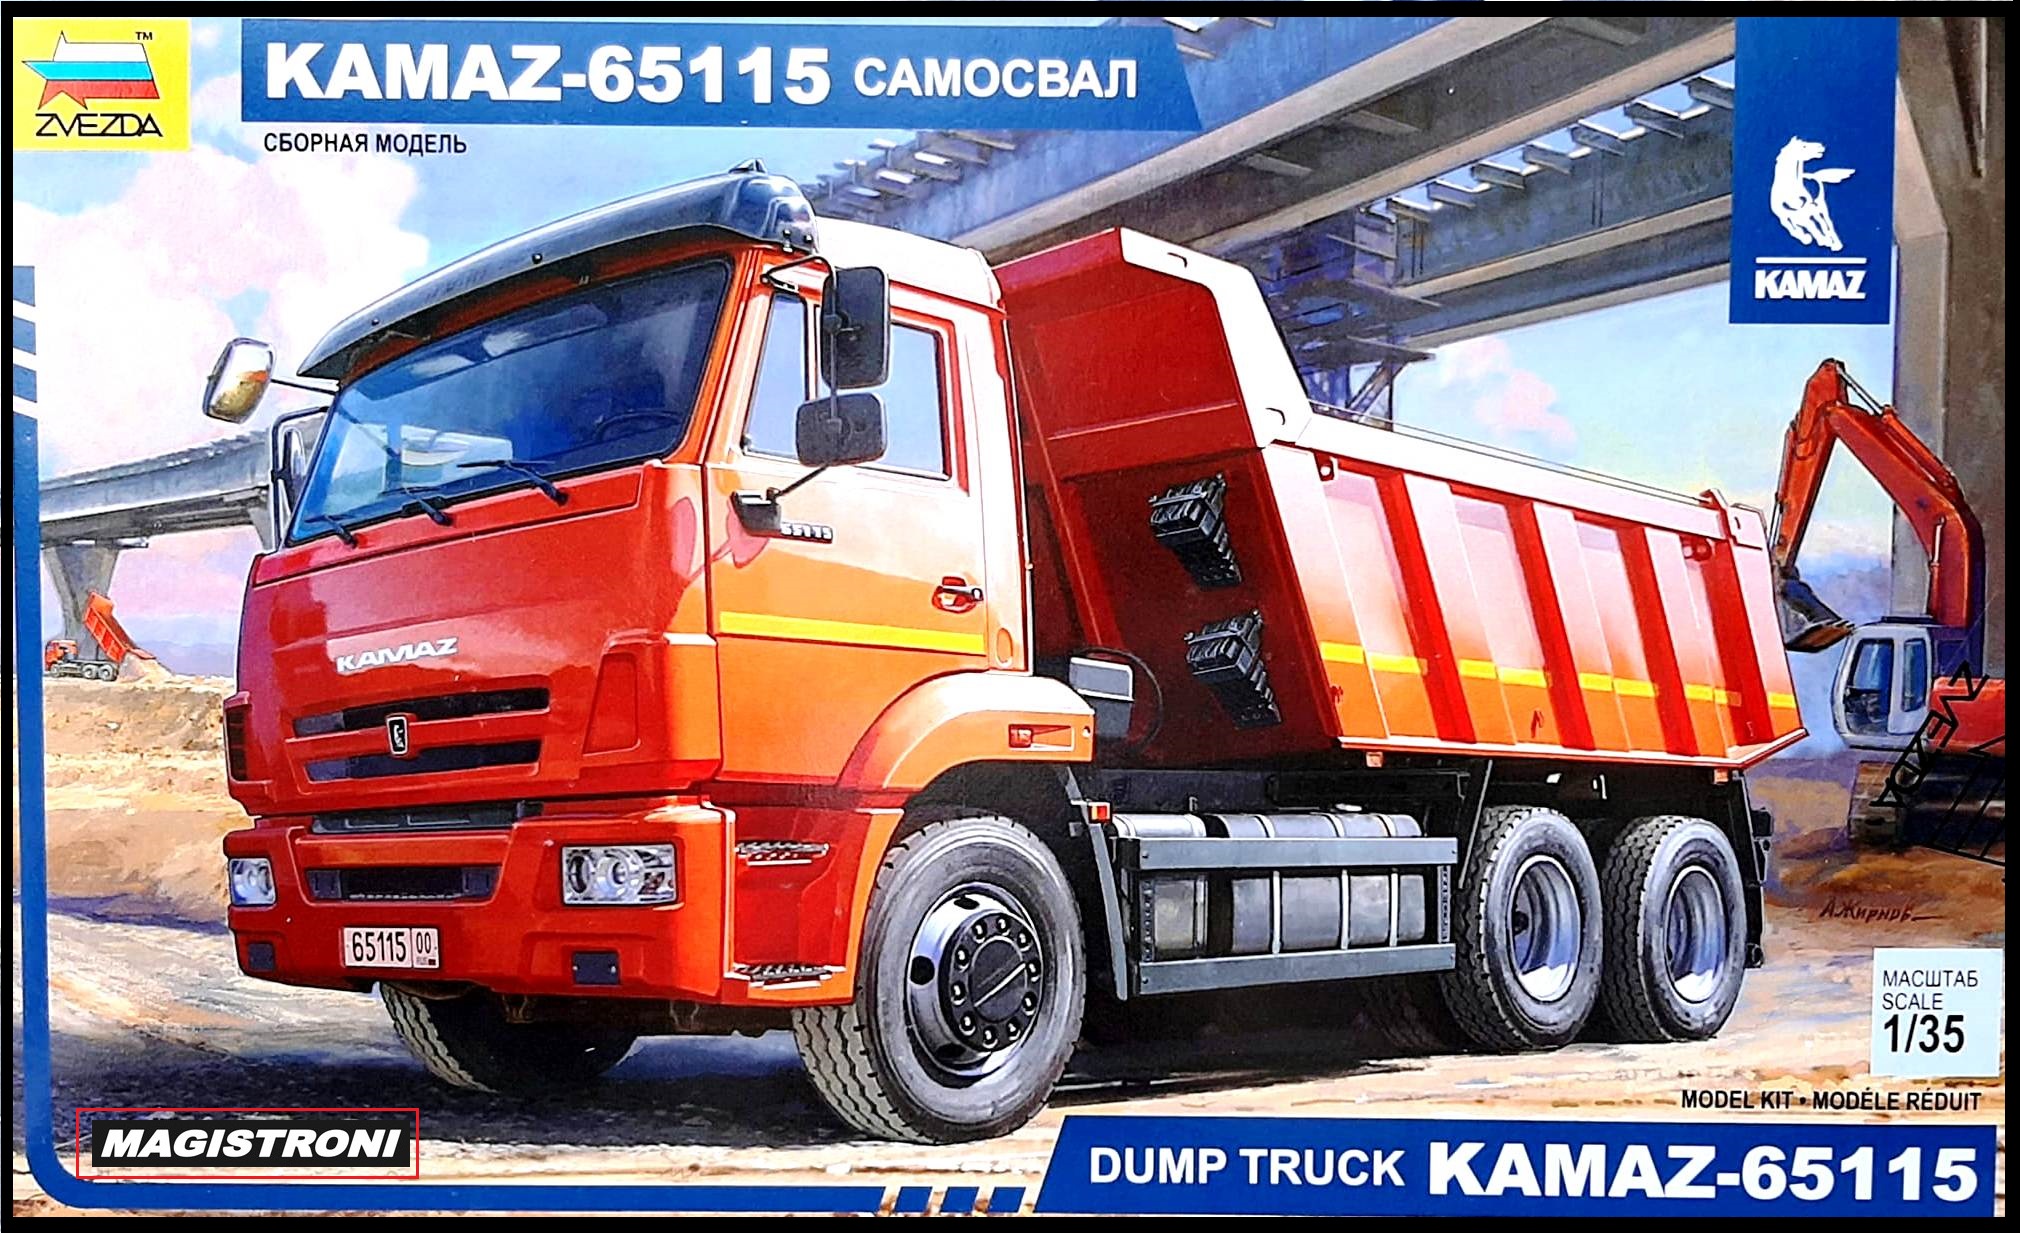 DUMP TRUCK KAMAZ -65115